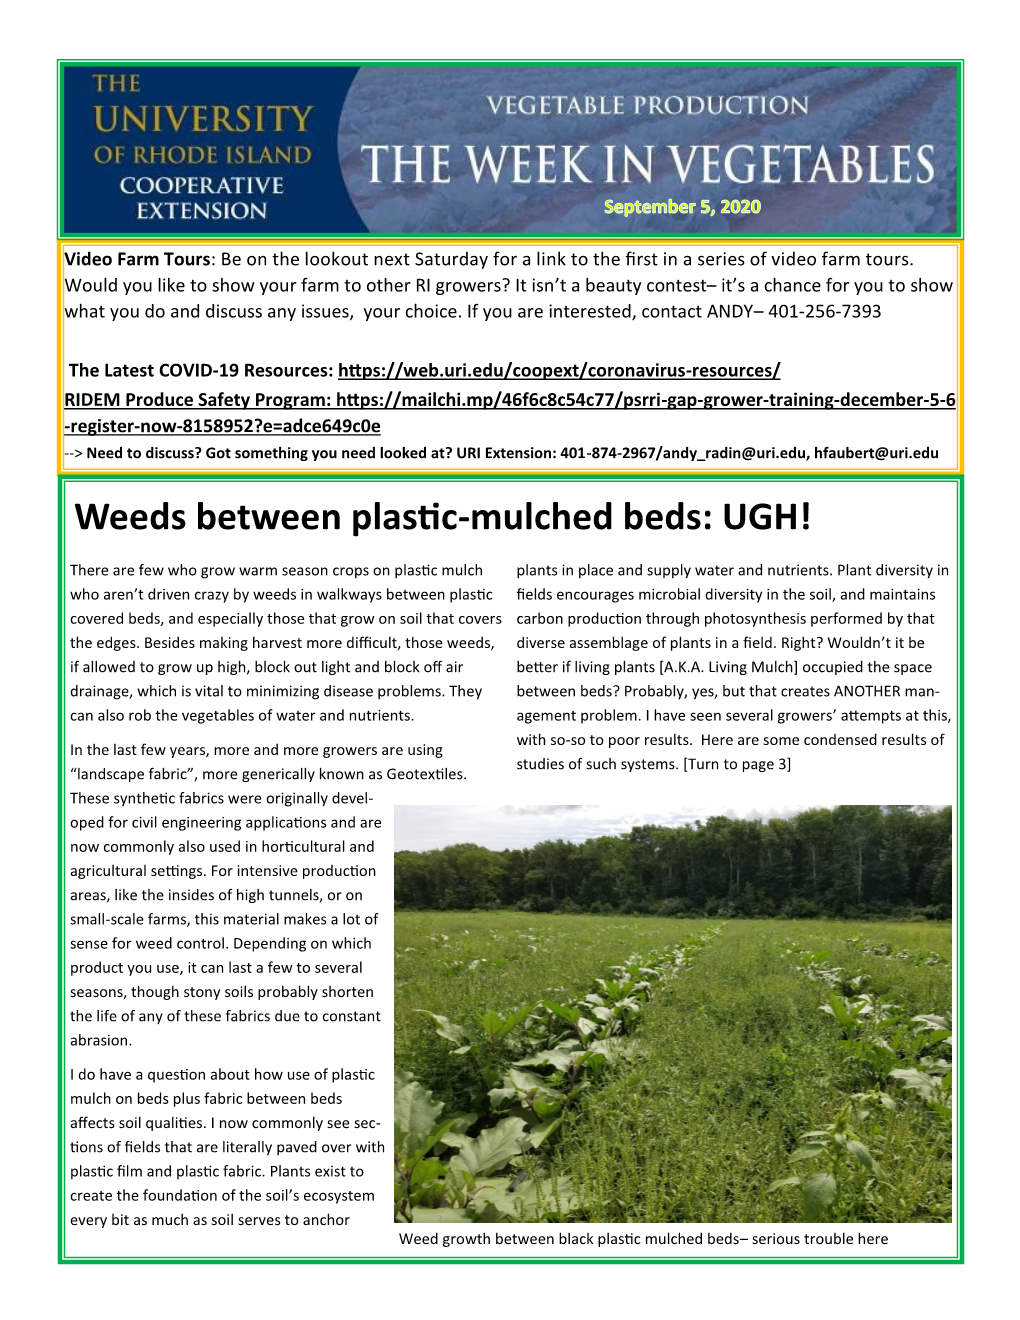 Weeds Between Plastic-Mulched Beds: UGH!